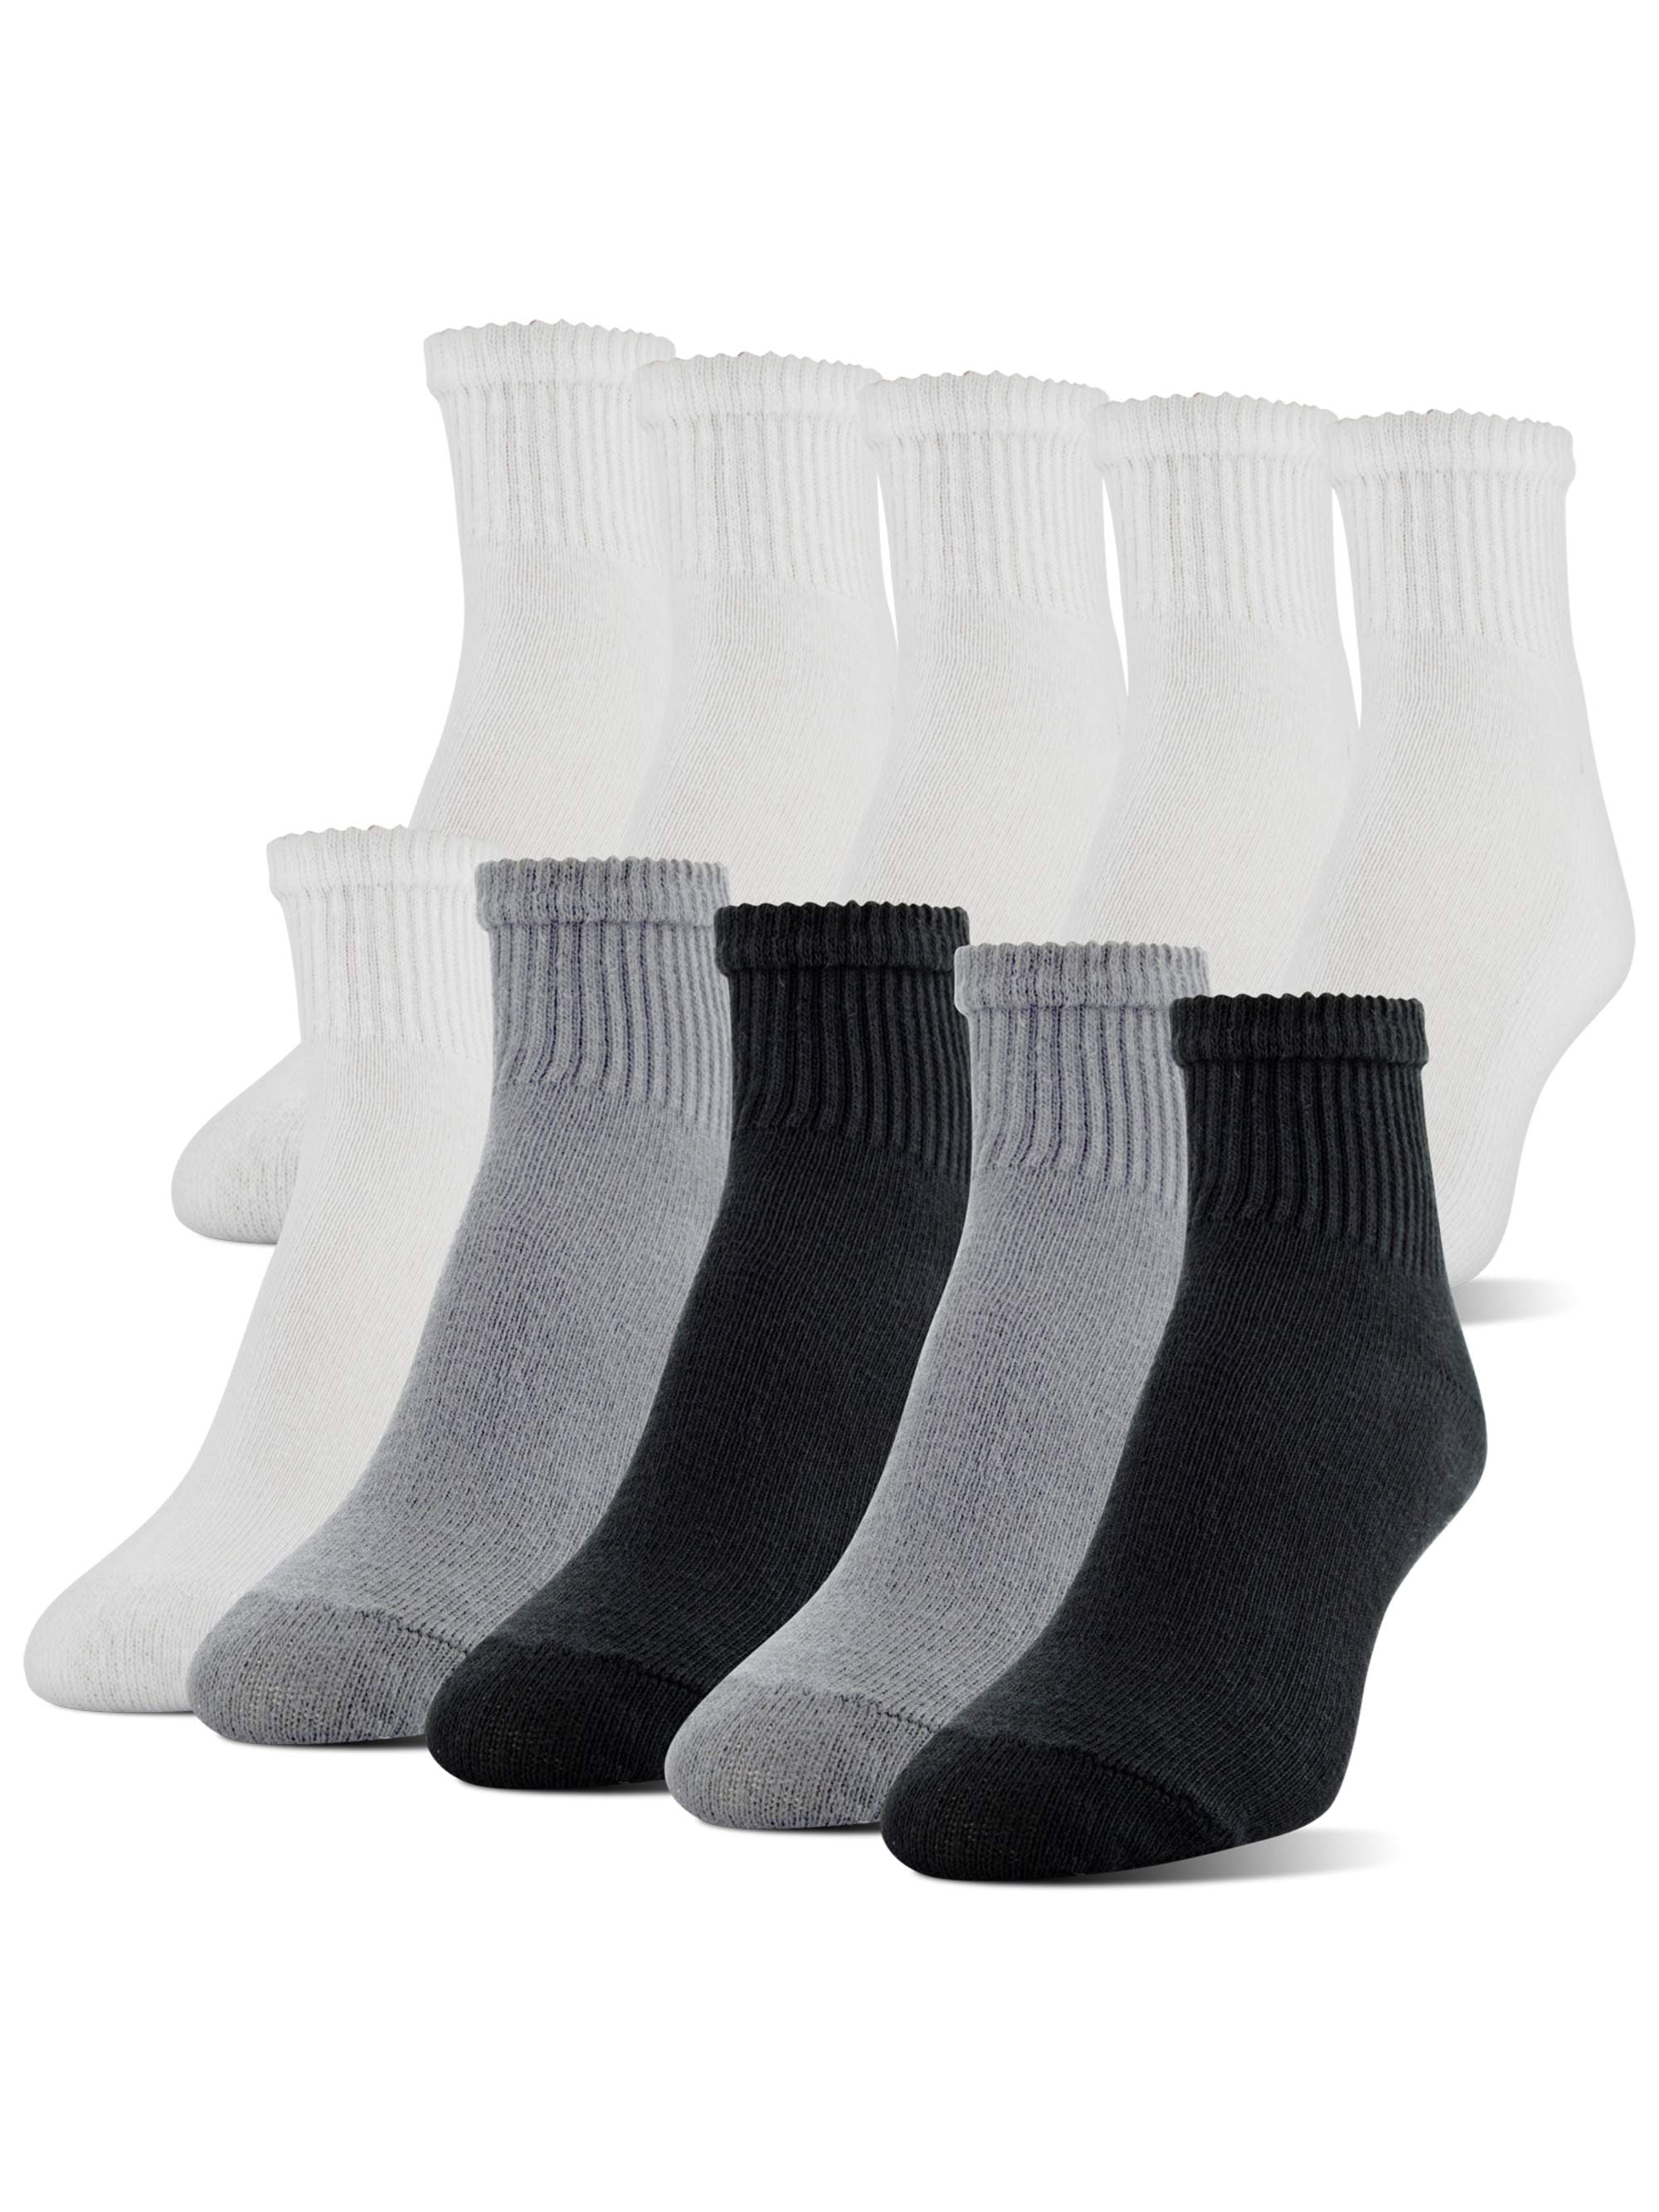 Athletic Works Women's Half Cushion Ankle Socks, 10 Pairs - Walmart.com